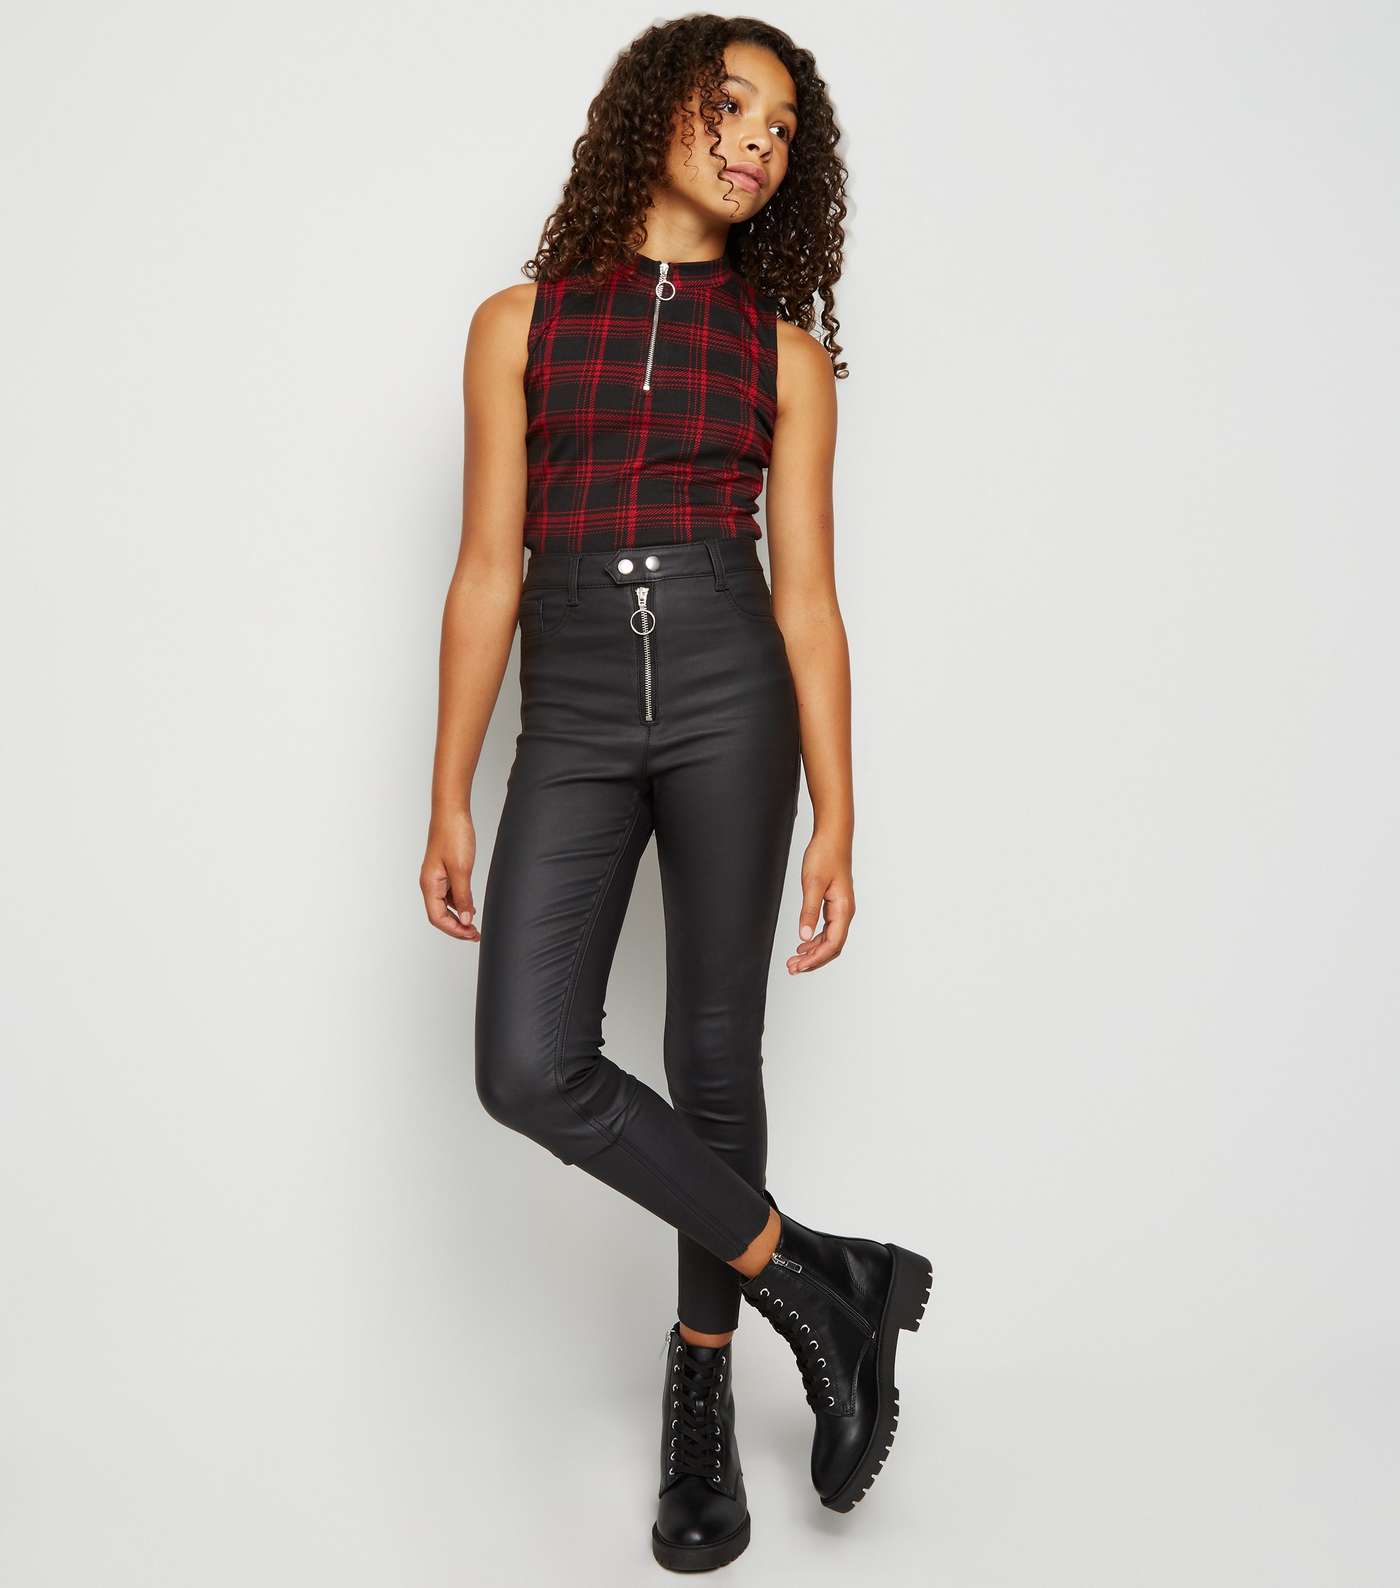 Girls Black Leather-Look High Waist Skinny Jeans